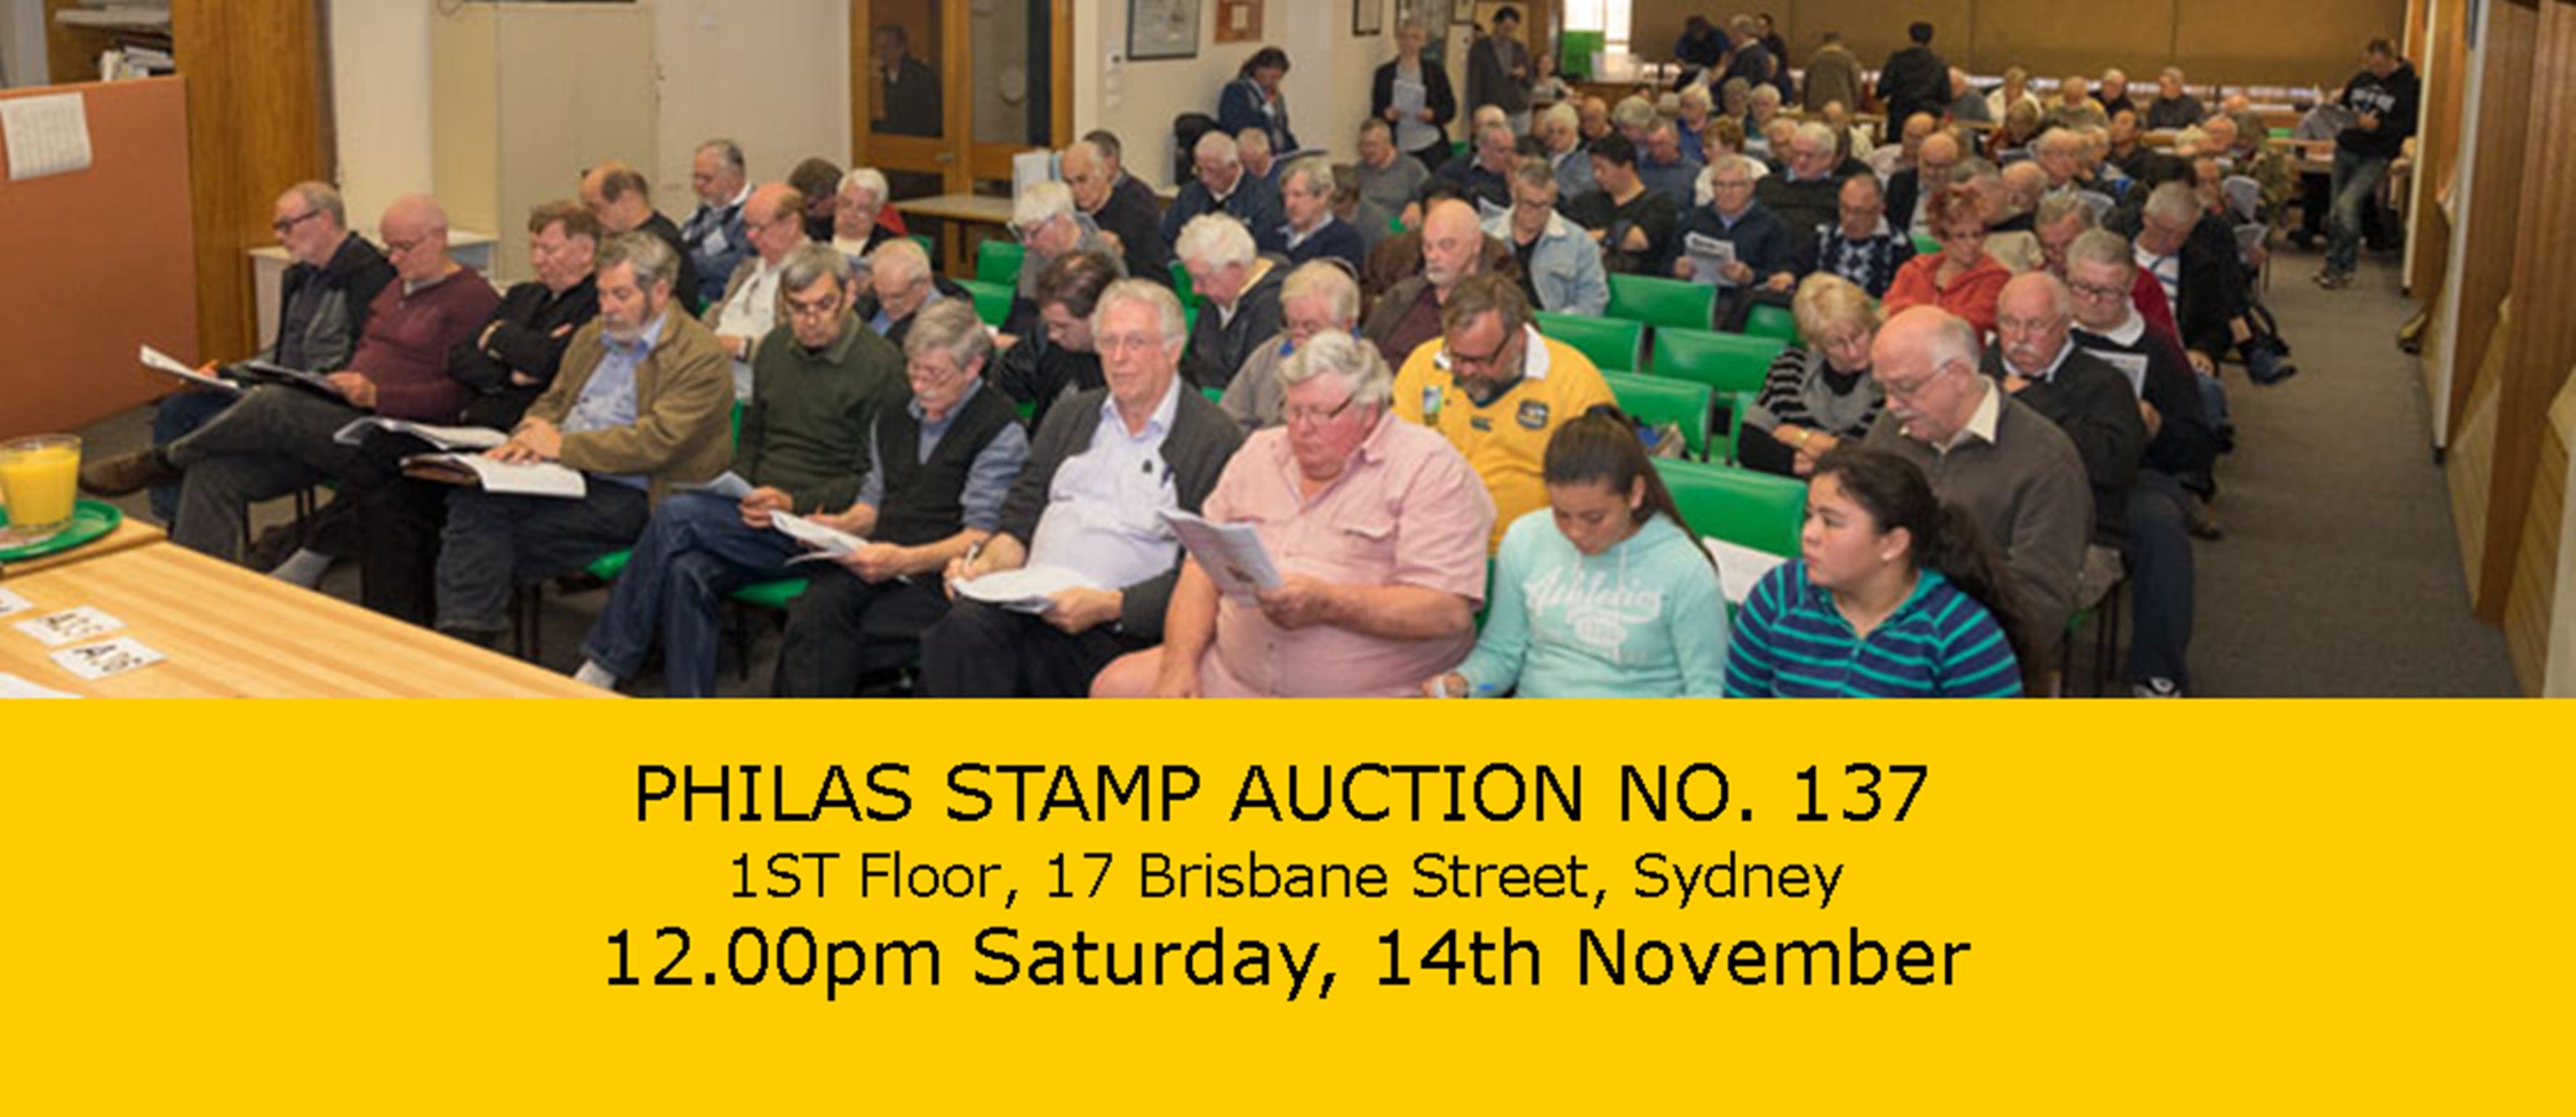 PHILAS Stamp Auction No. 137 - Casino Accommodation